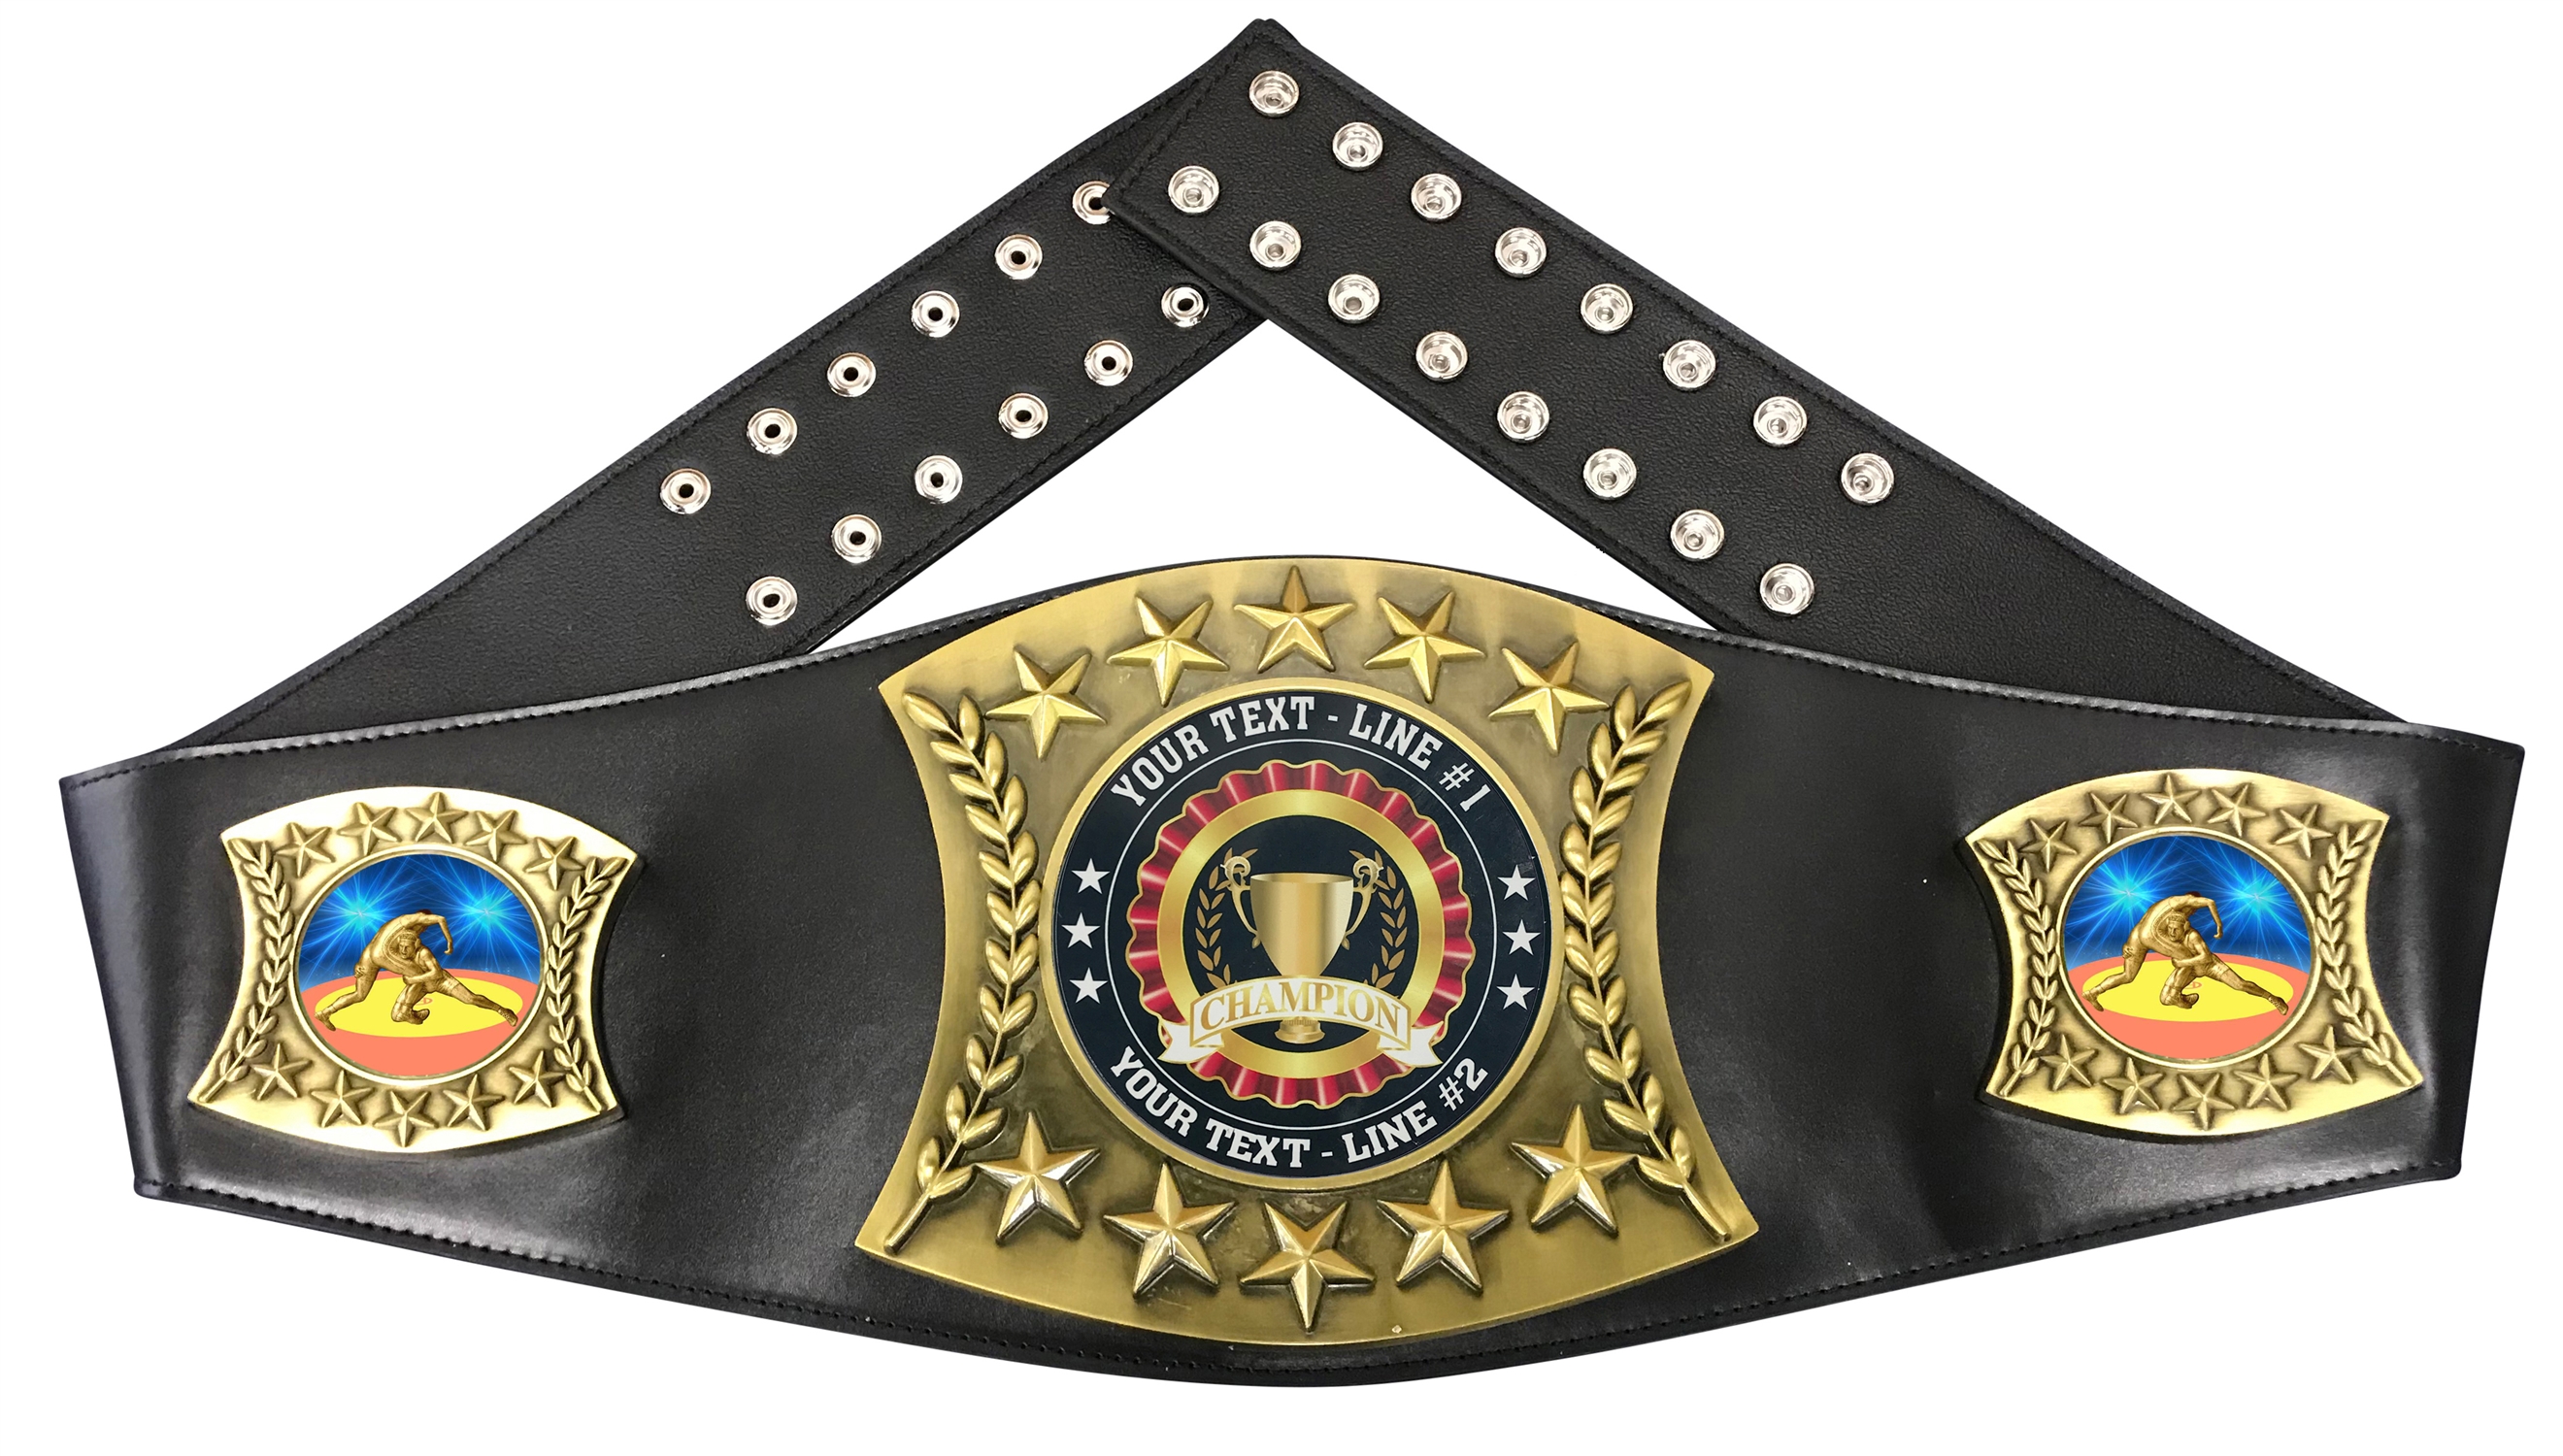 Wrestling Personalized Championship Leather Belt